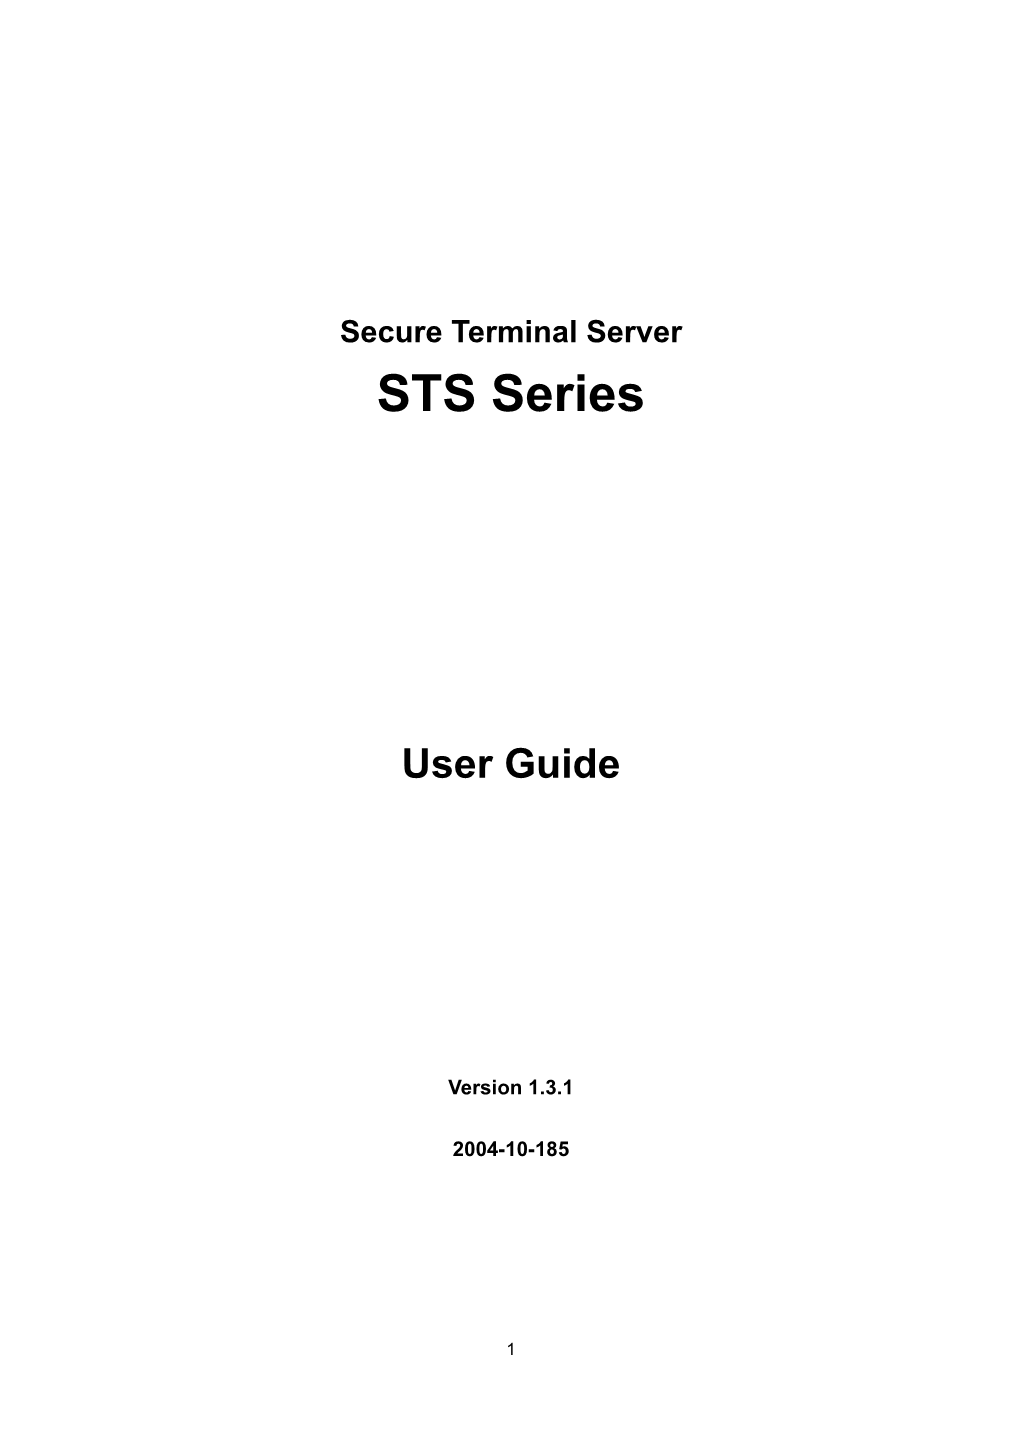 SS User Manual